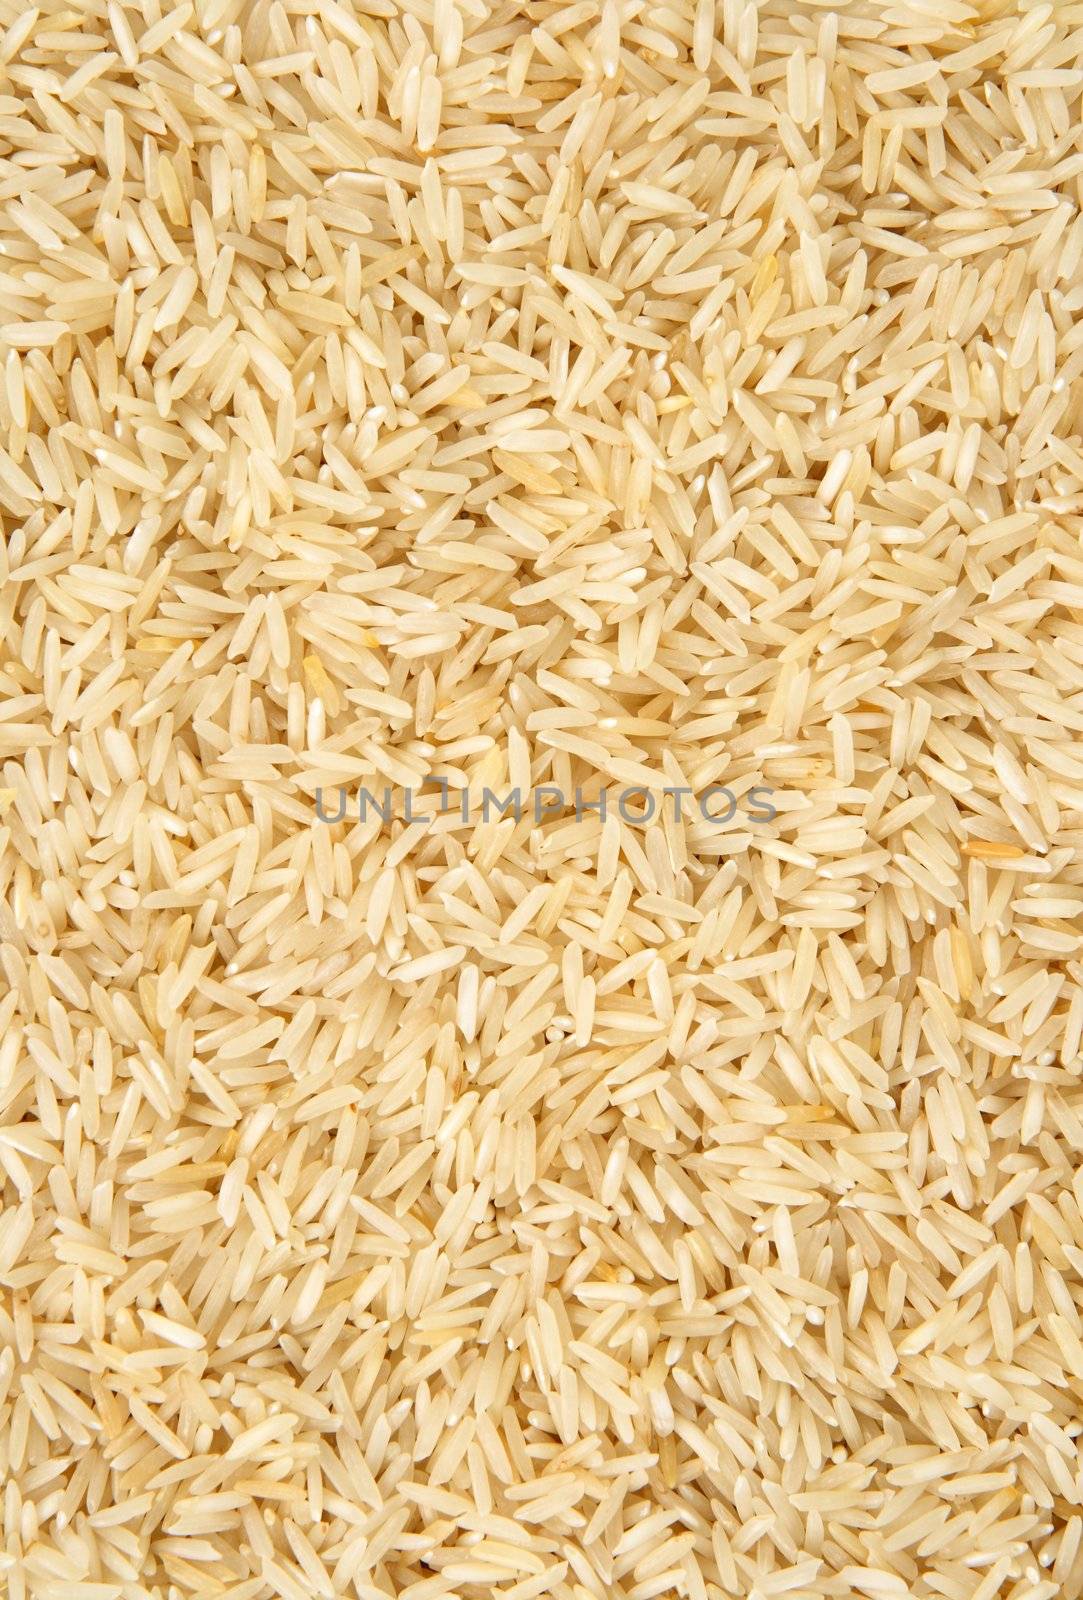 Basmati rice background by anikasalsera